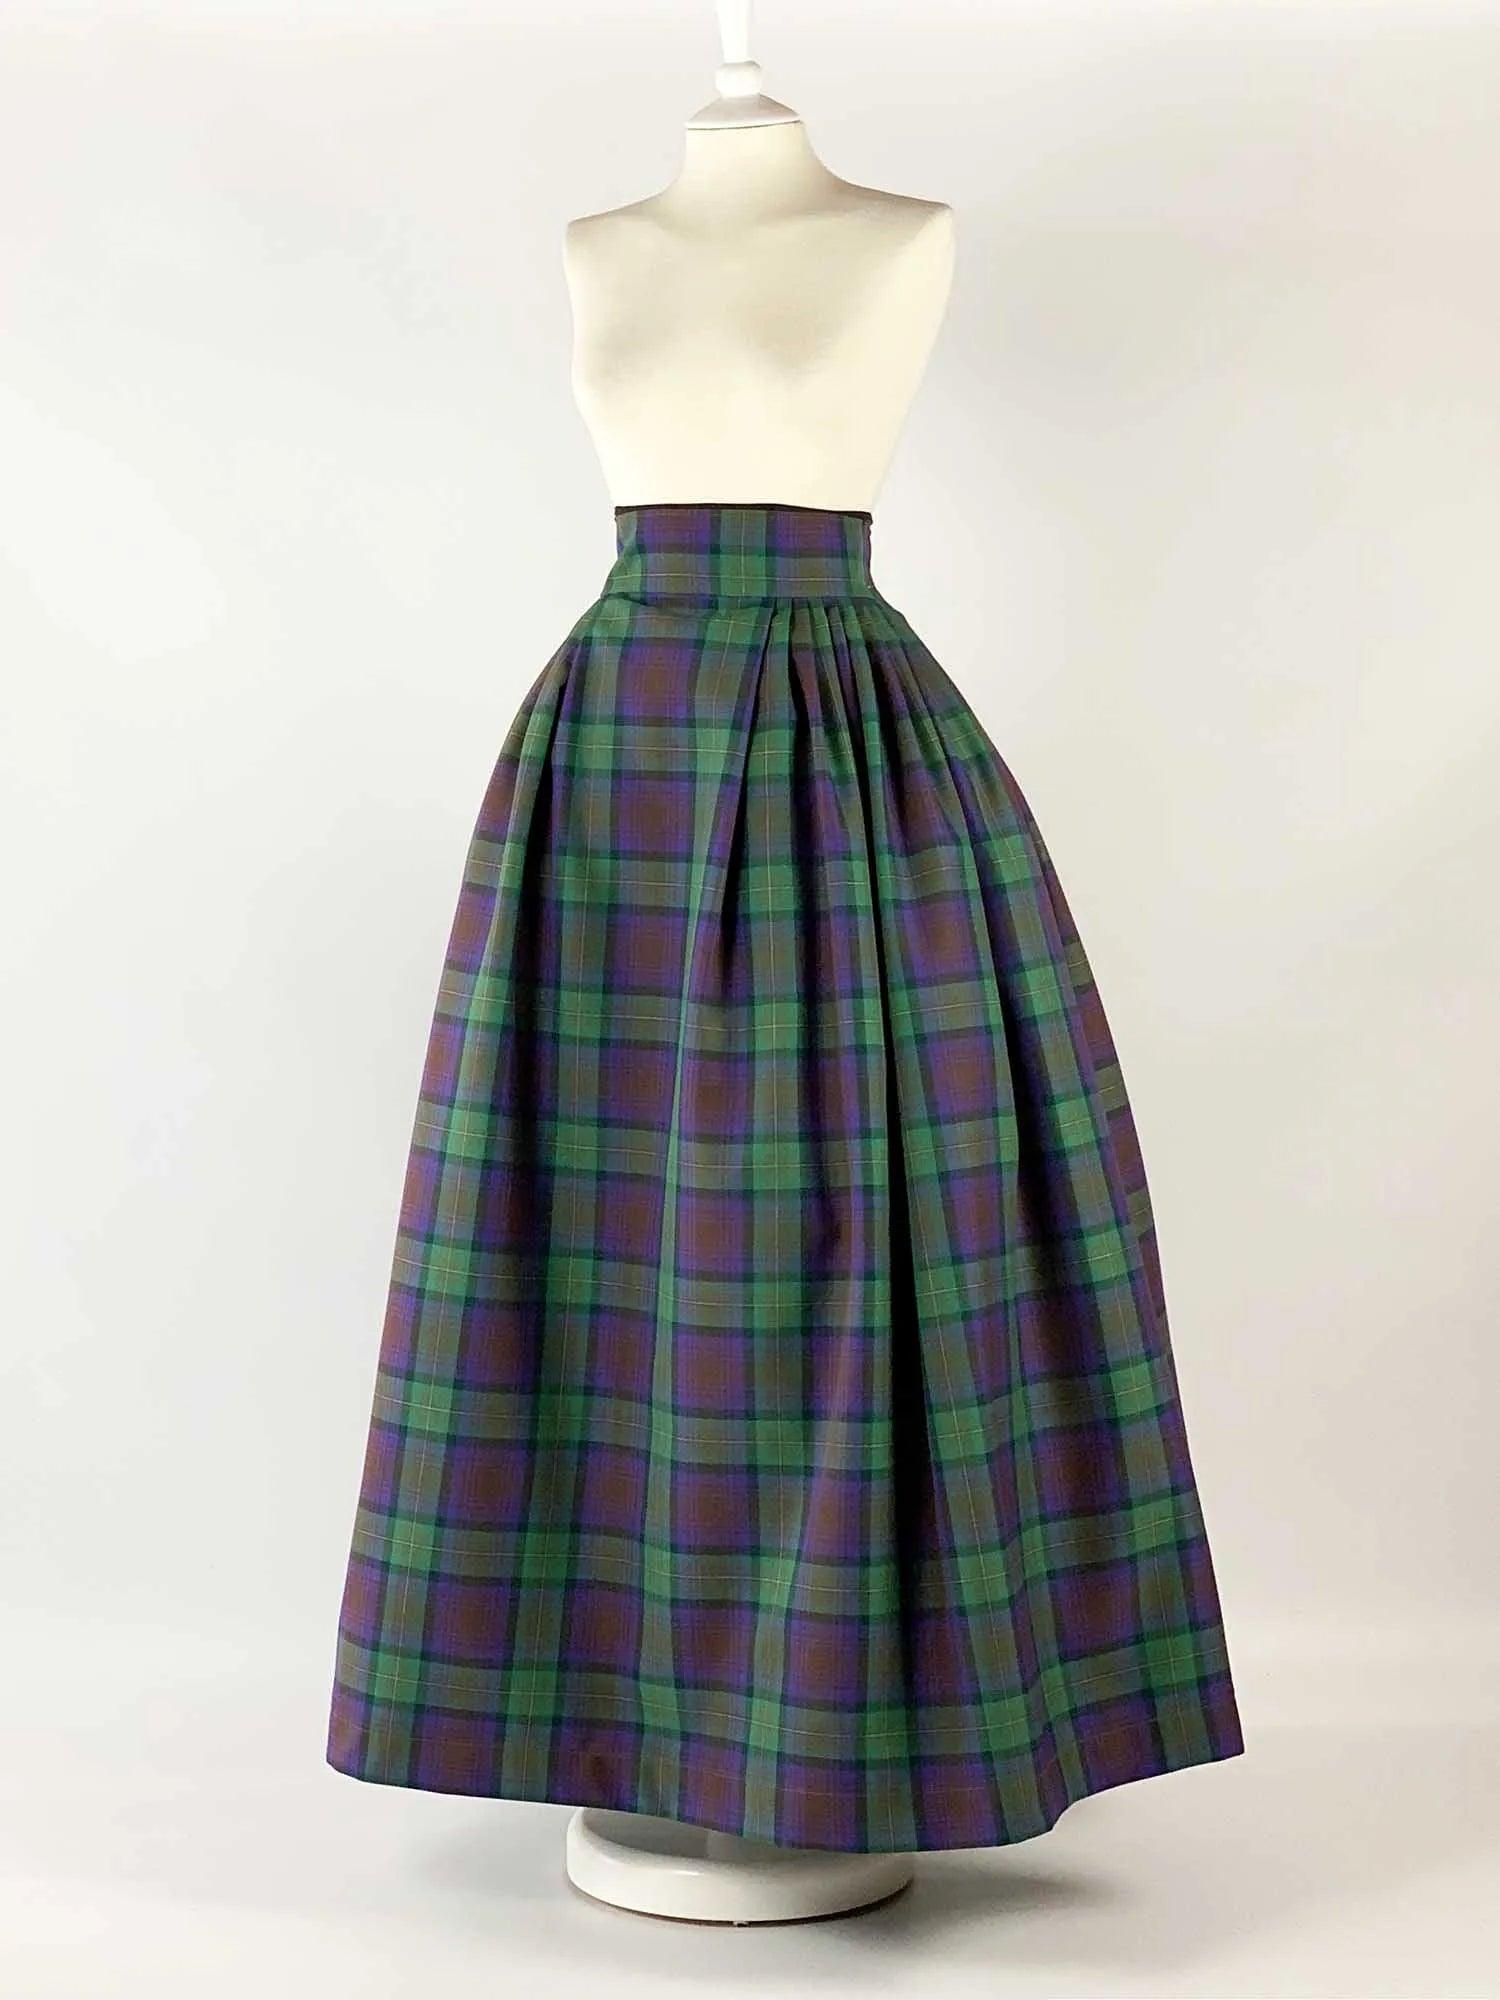 Plaid Skirt in Isle Of Skye Tartan - Atelier Serraspina